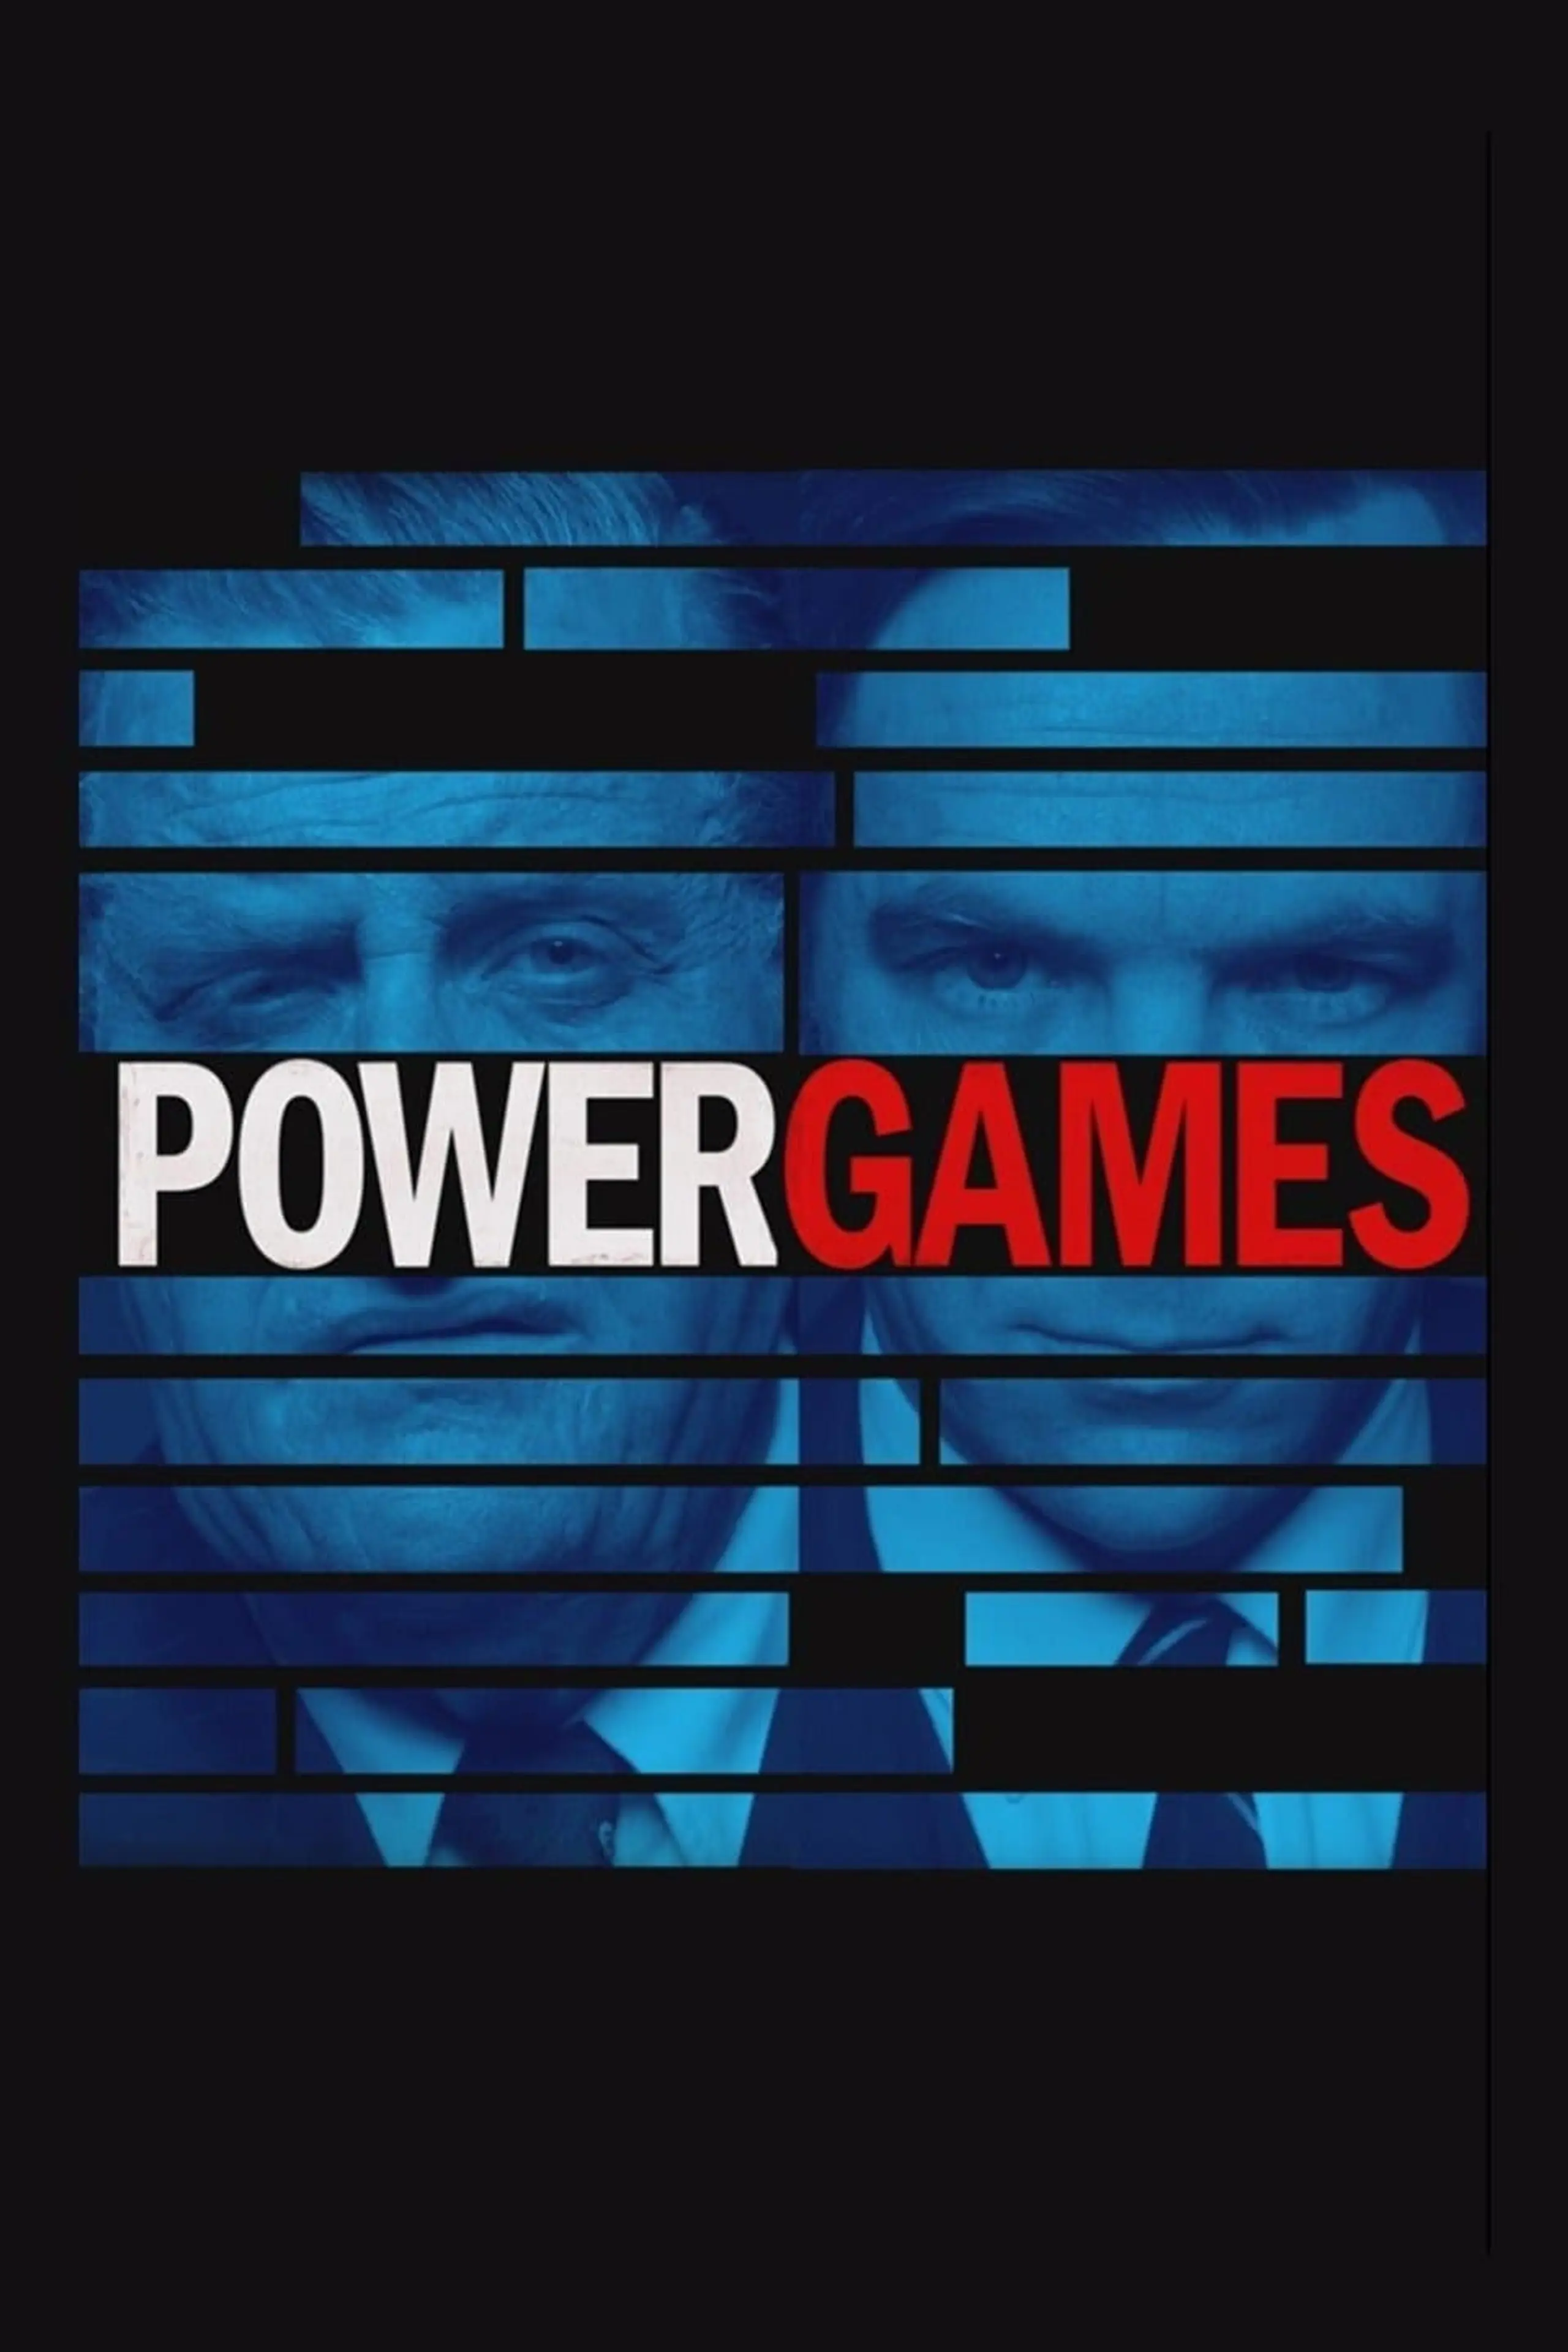 Power Games: The Packer-Murdoch Story